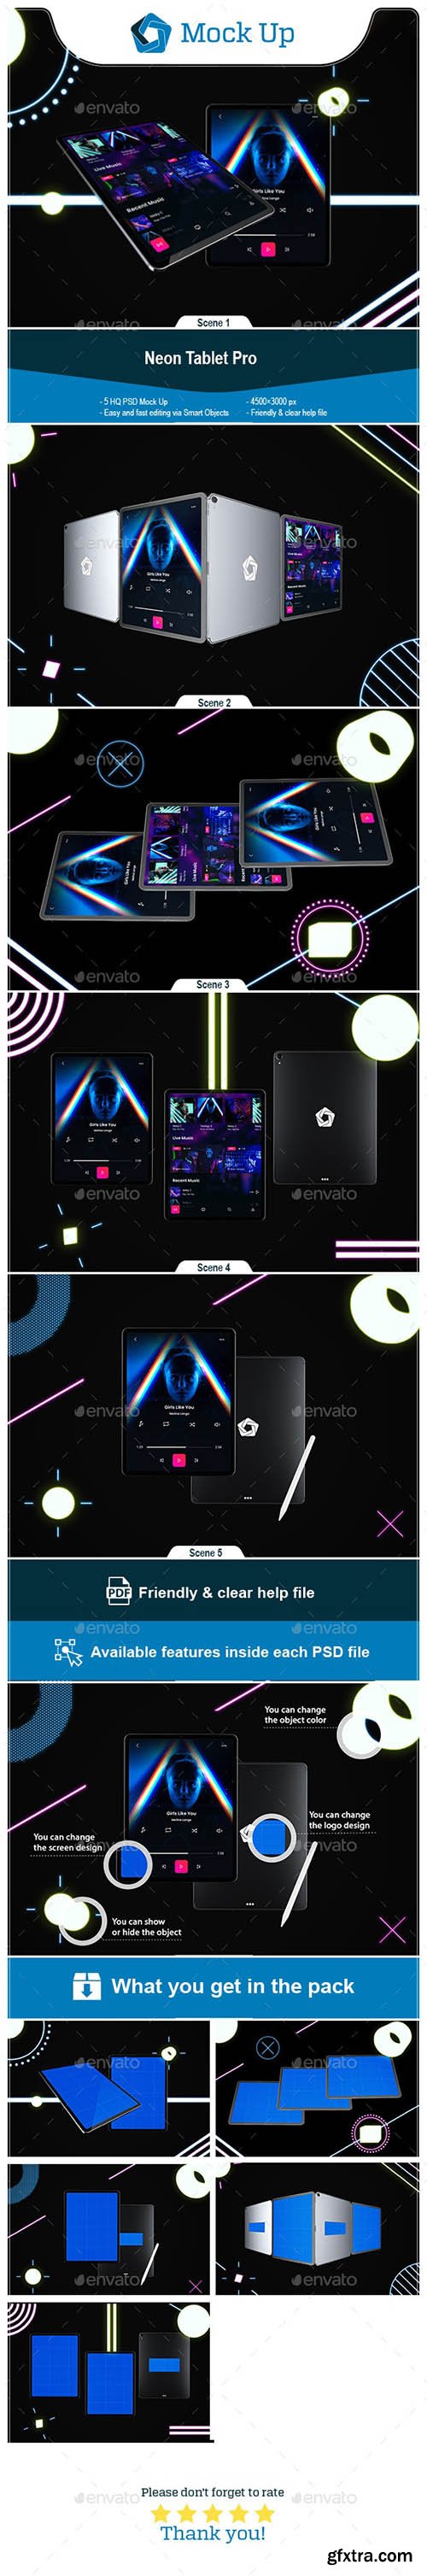 GraphicRiver - Neon Tablet Pro Mockup 24681306